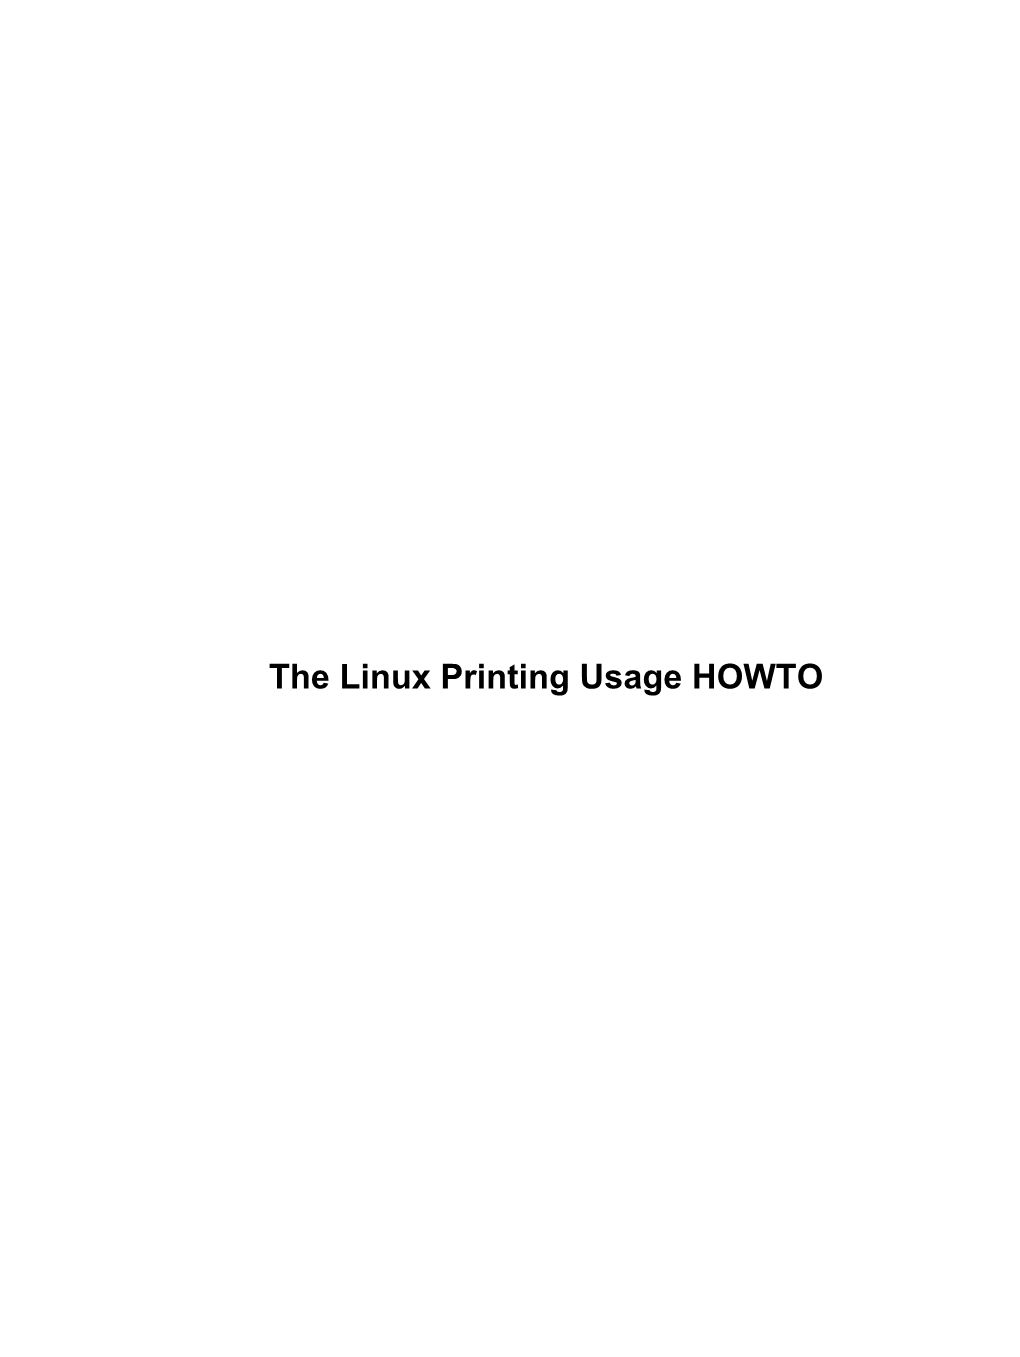 Printing-Usage-HOWTO.Pdf